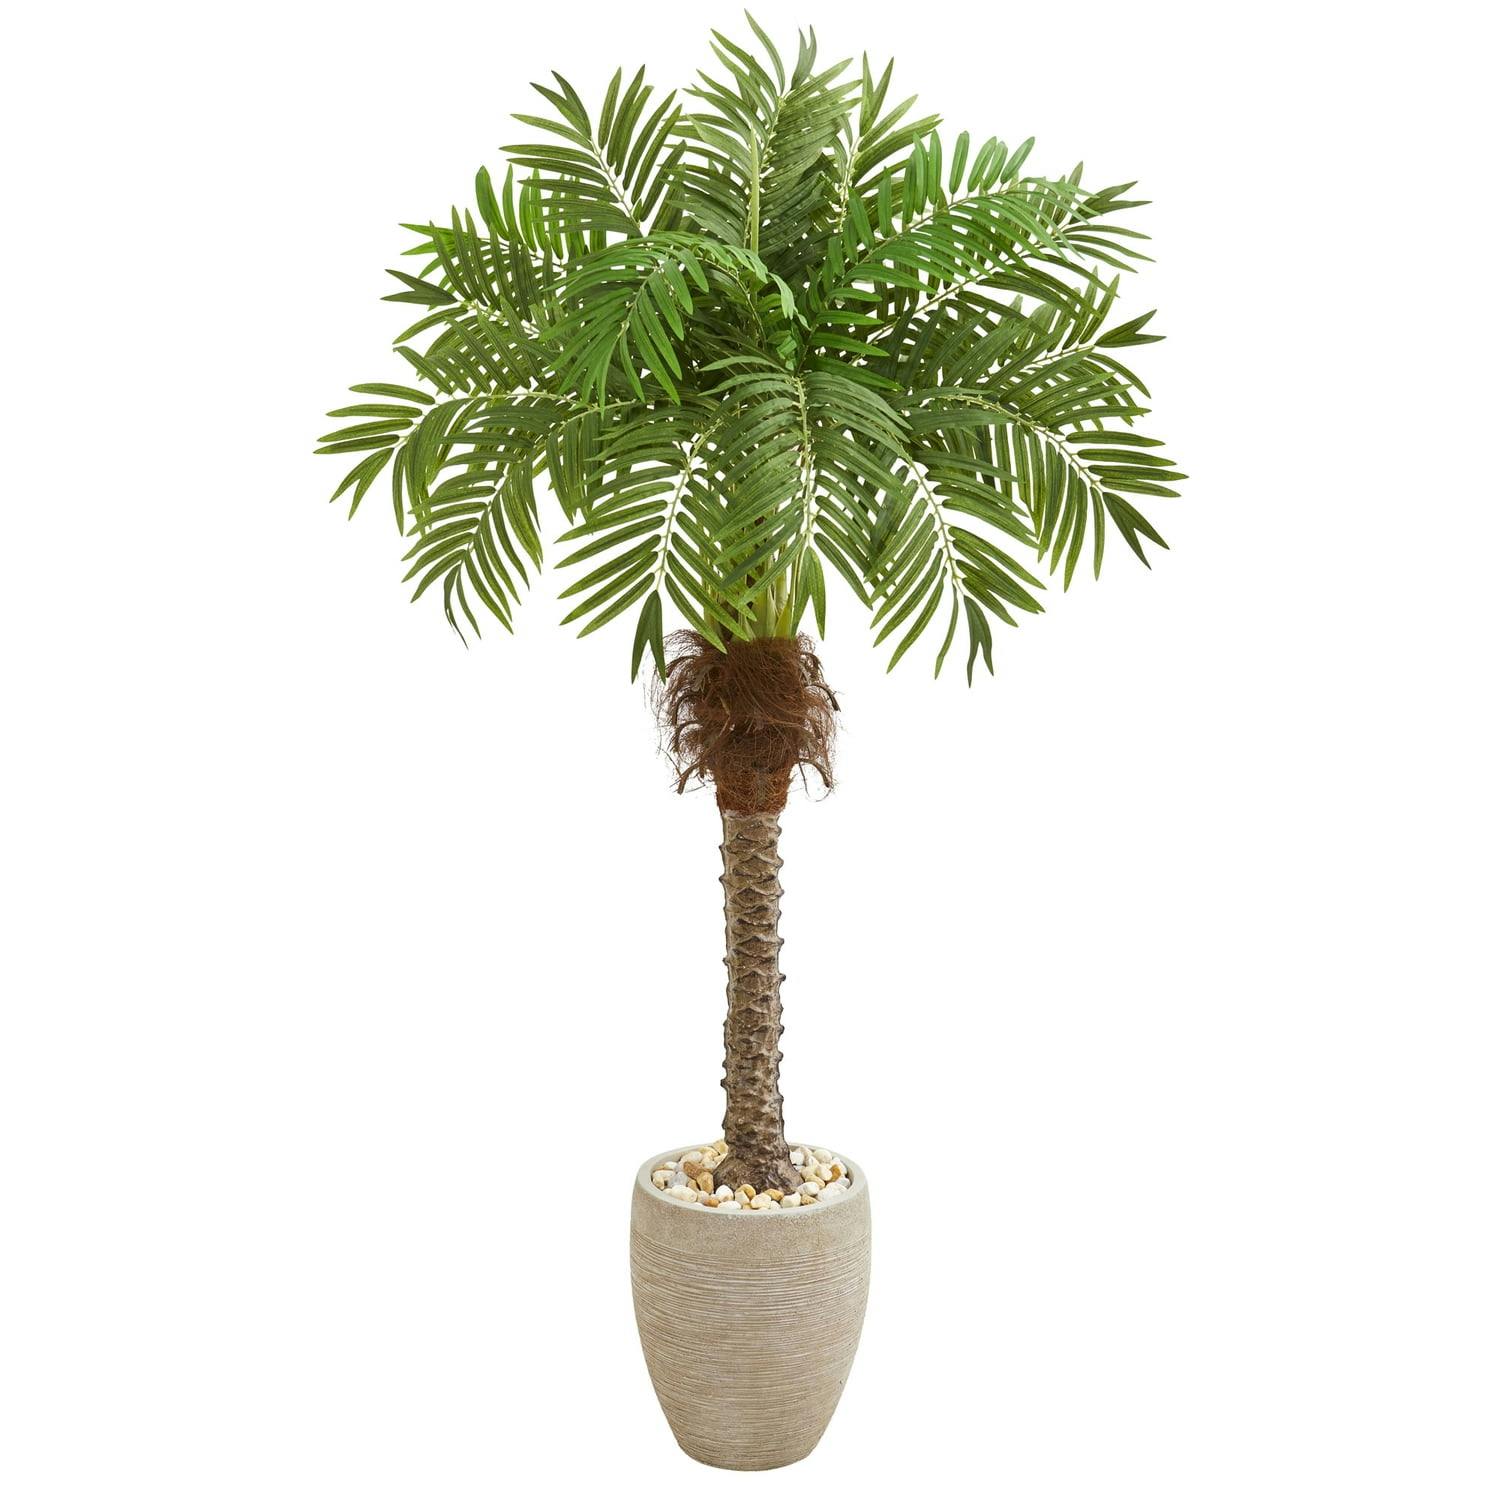 Tropical Summer 66" Robellini Palm Artificial Tree in Sandstone Planter